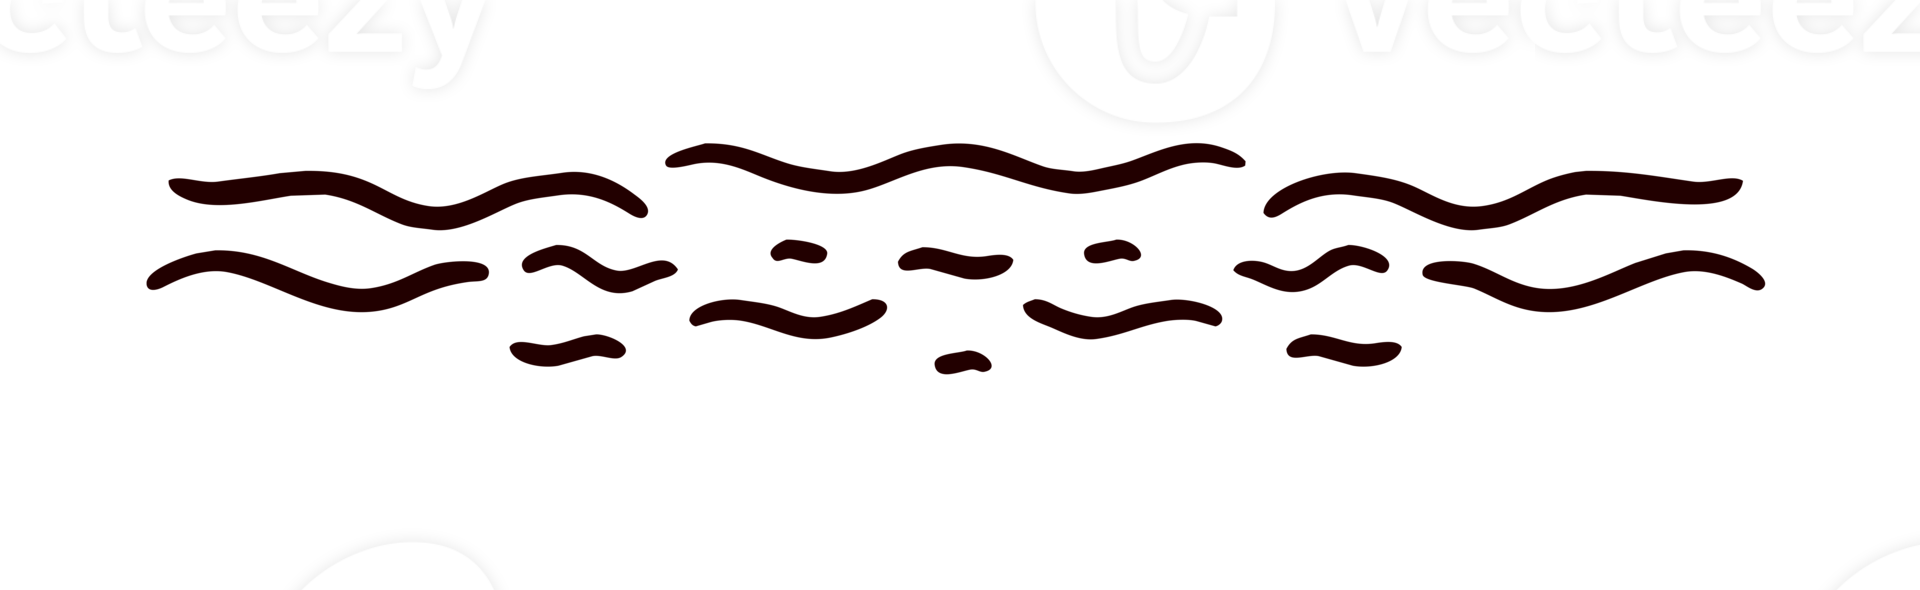 acqua onda silhouette png